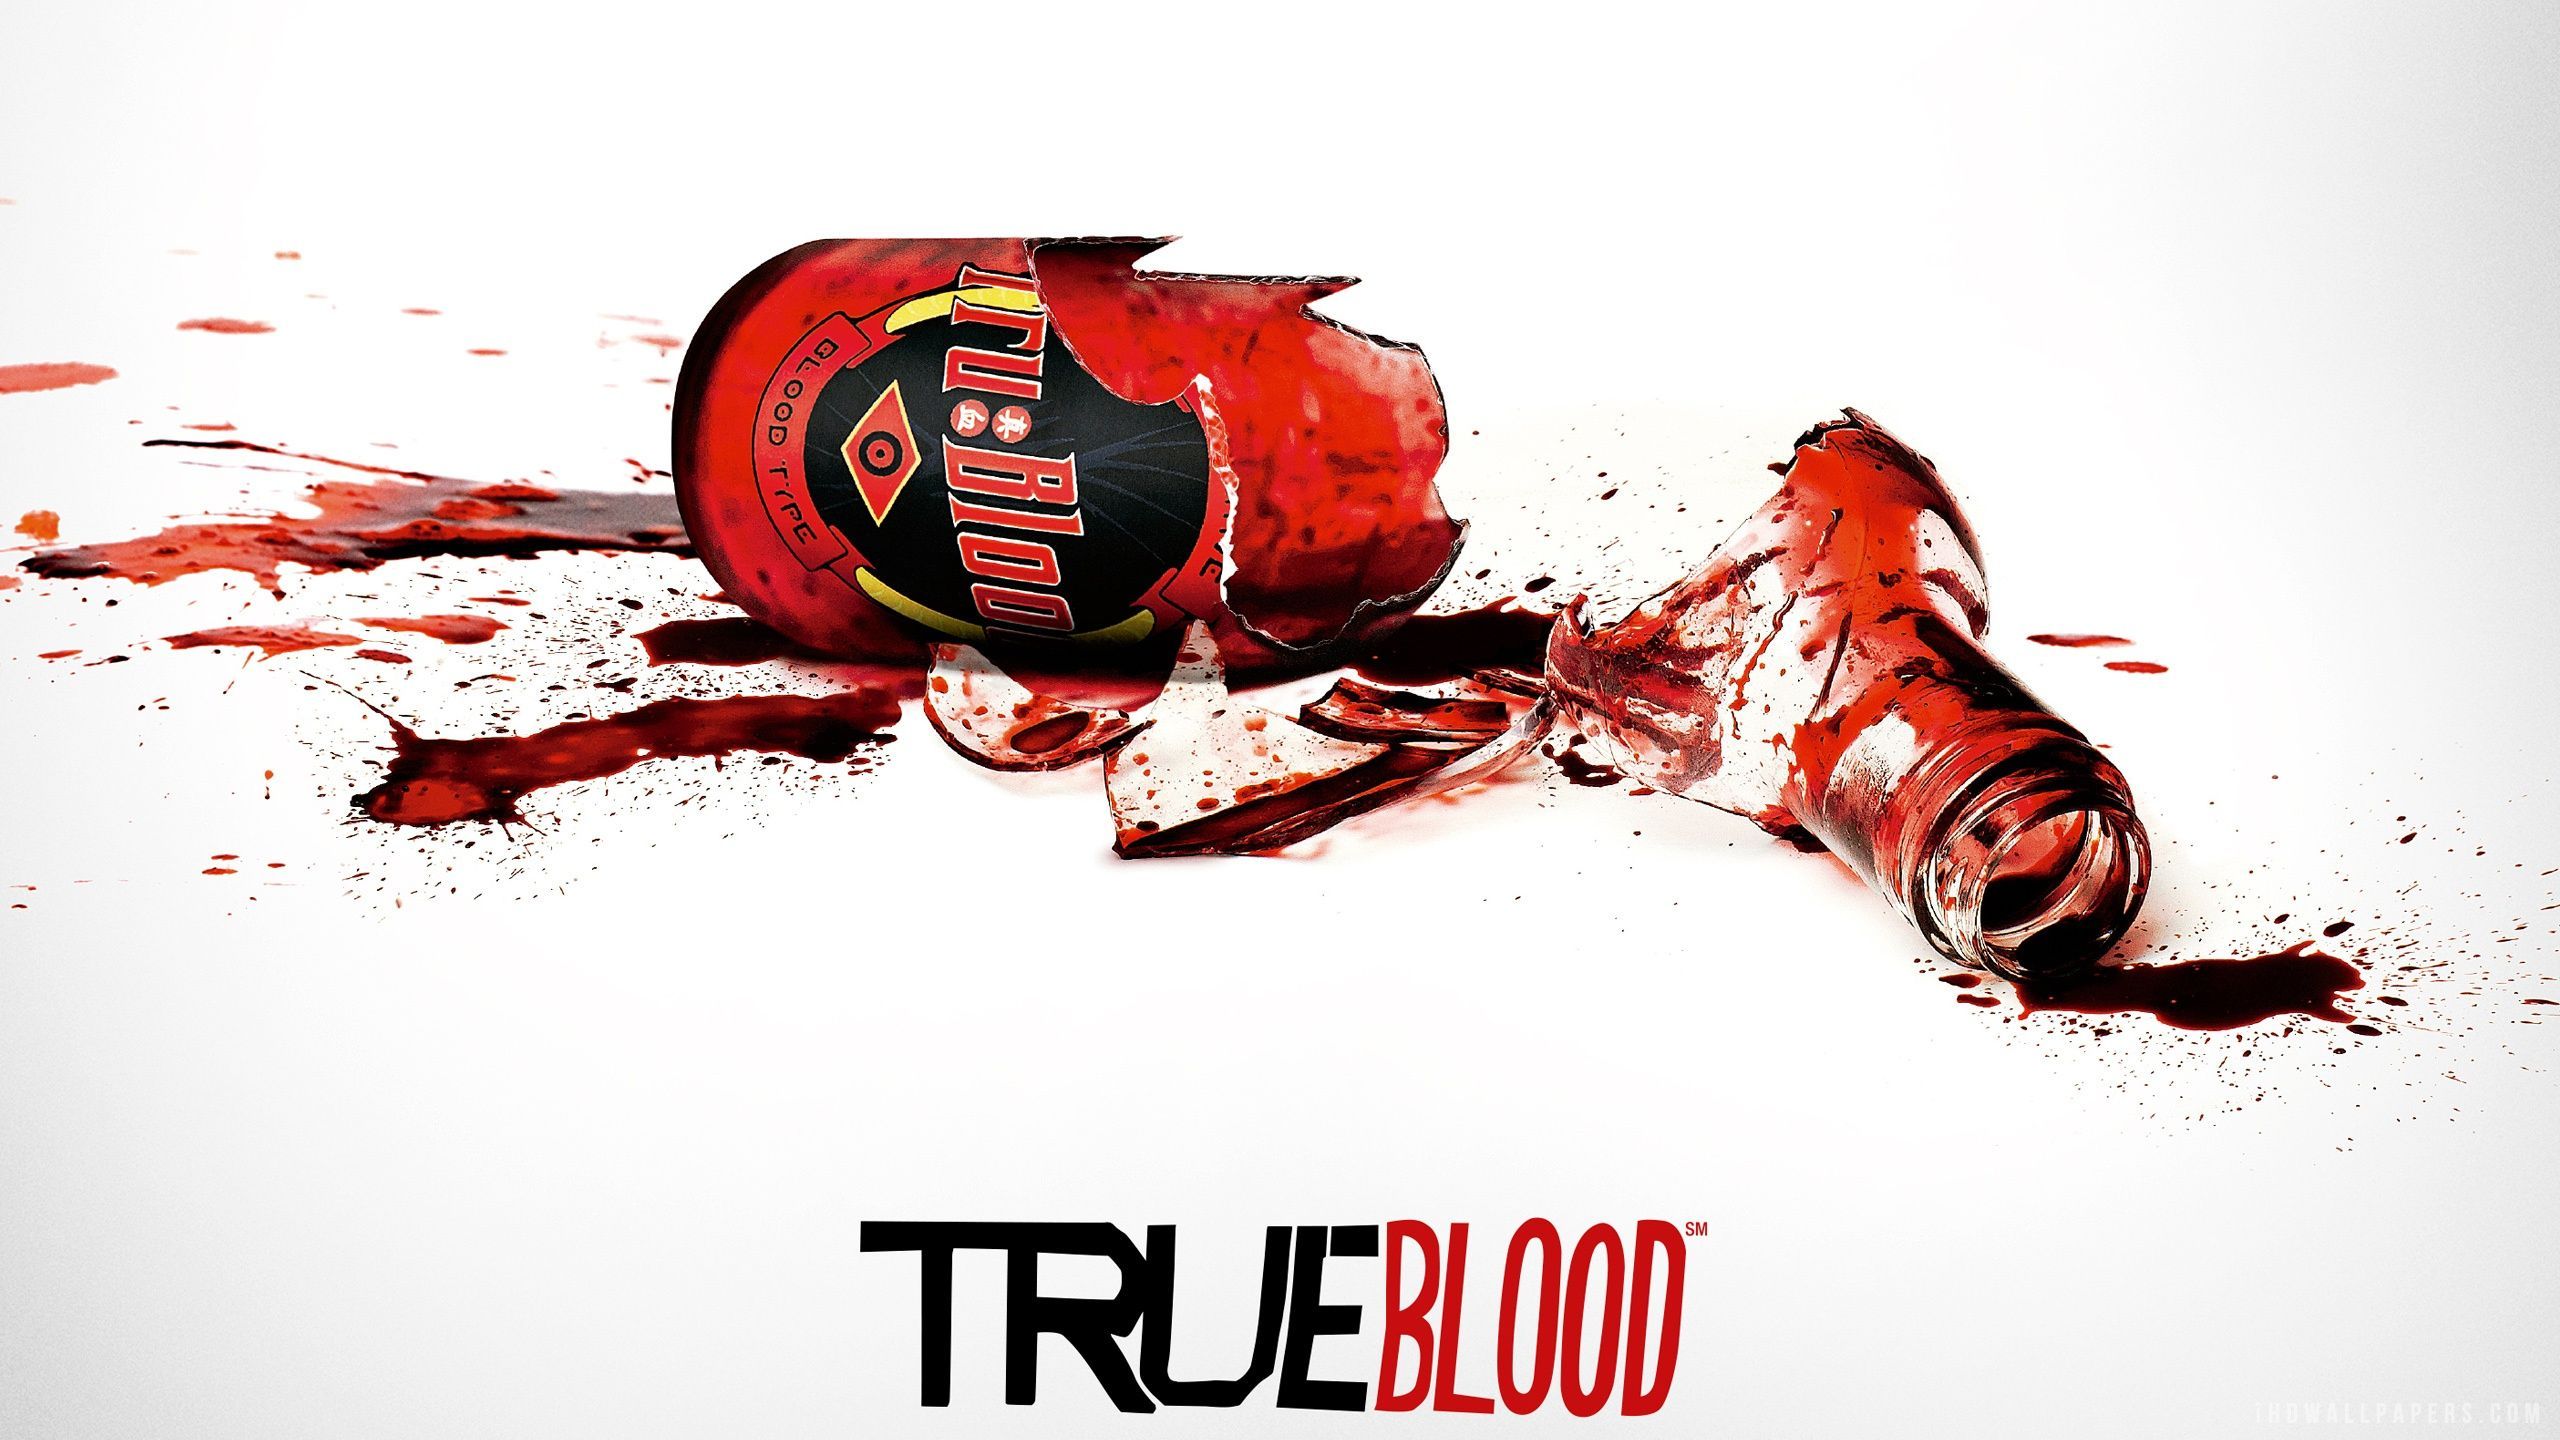 True Blood TV Series 2013 HD Wallpaper - iHD Wallpapers